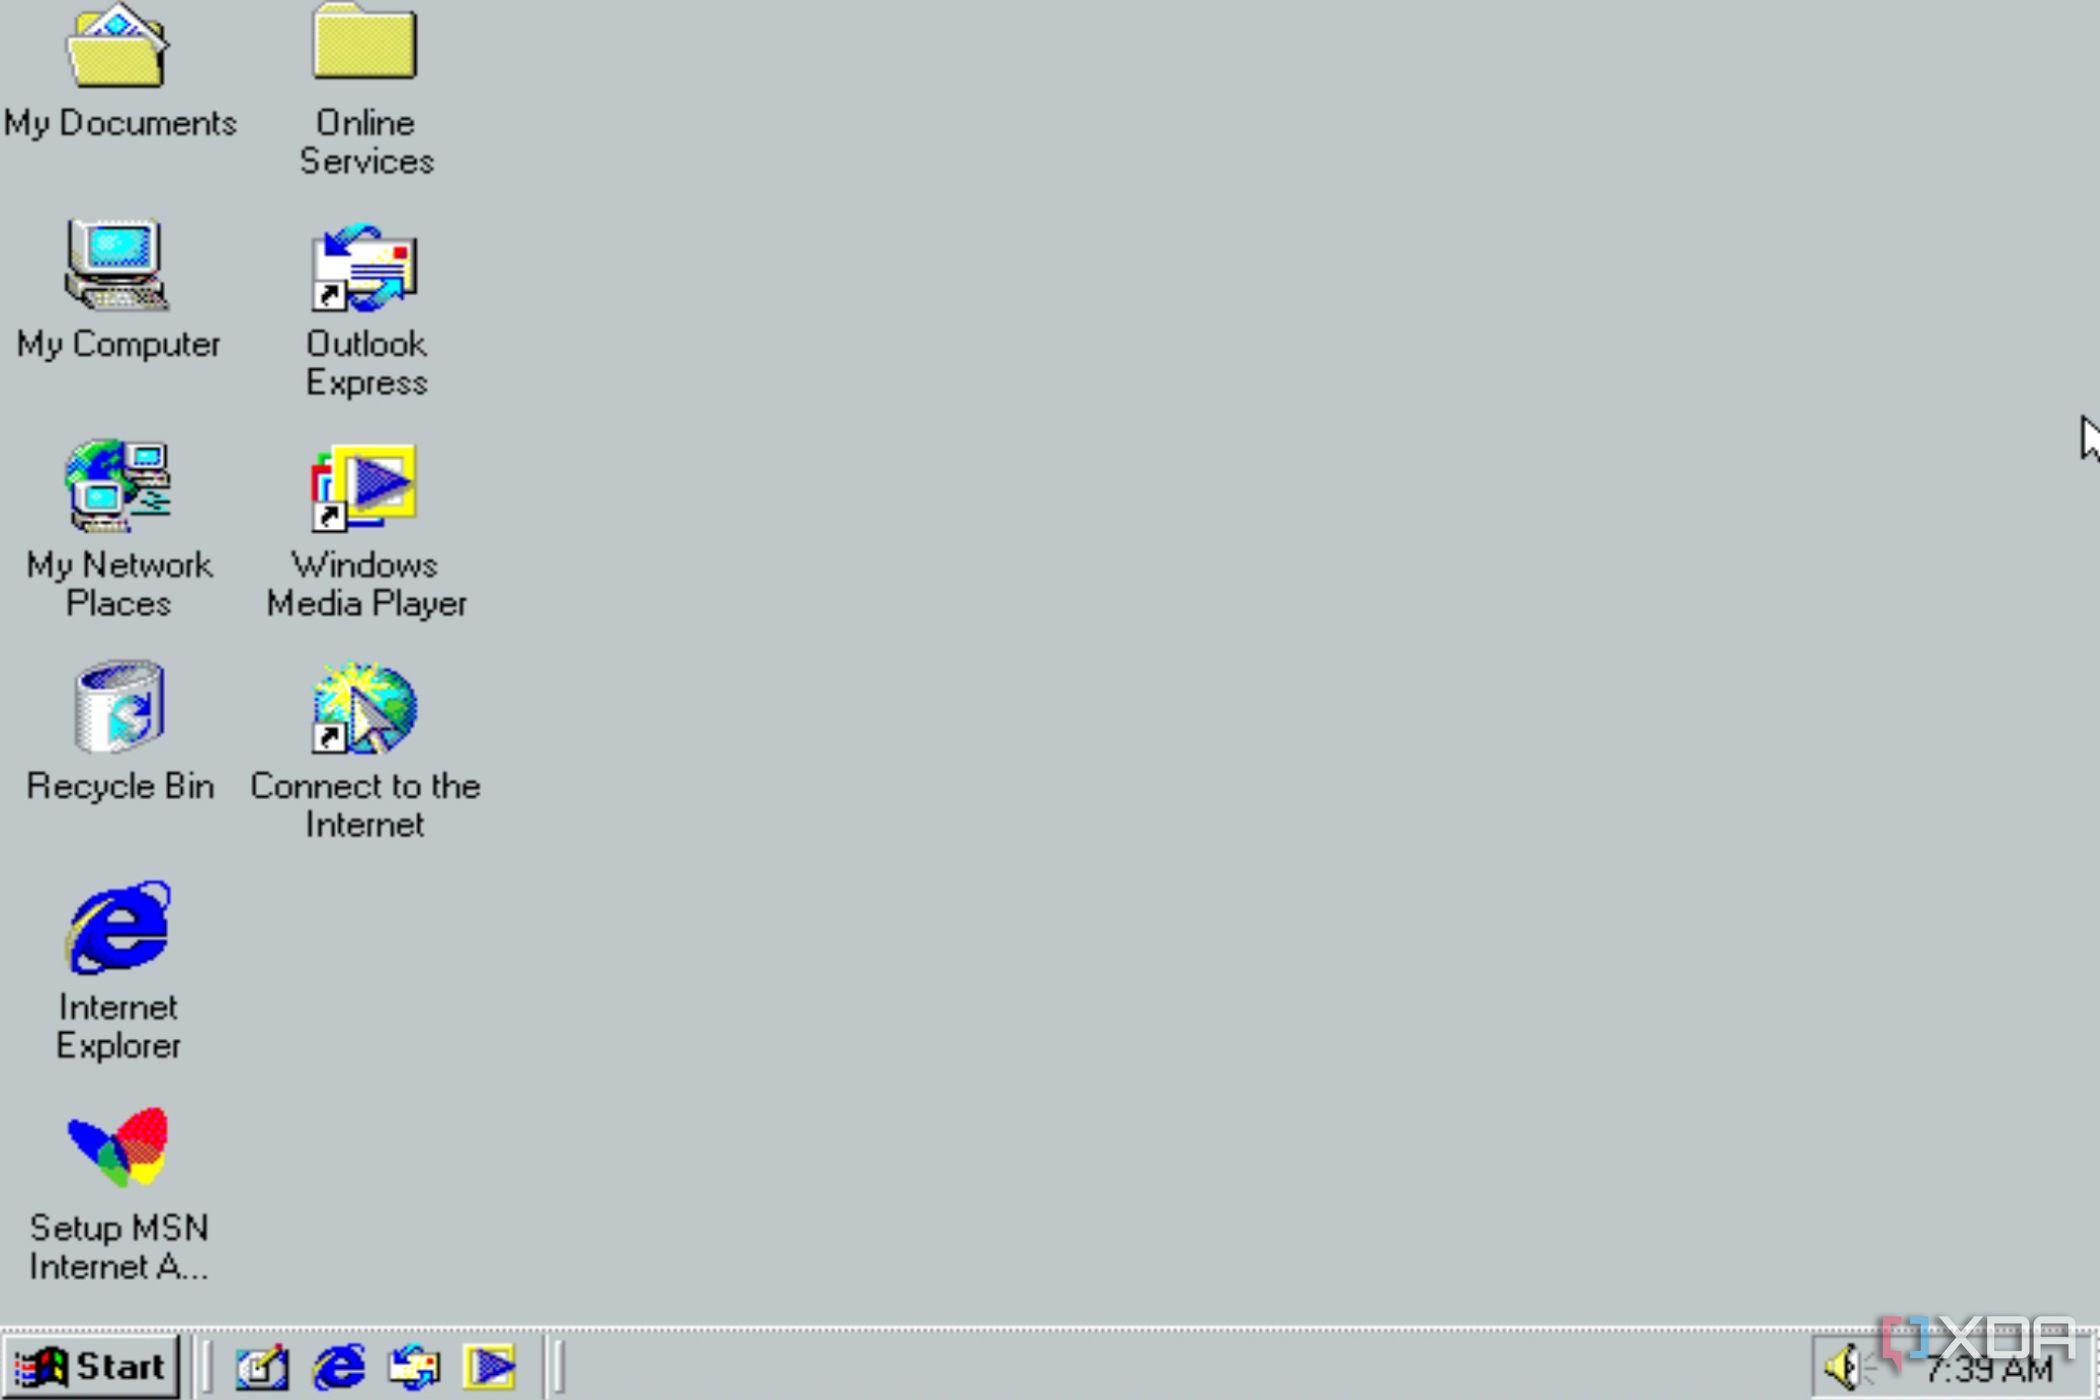 The default desktop layout in Windows ME